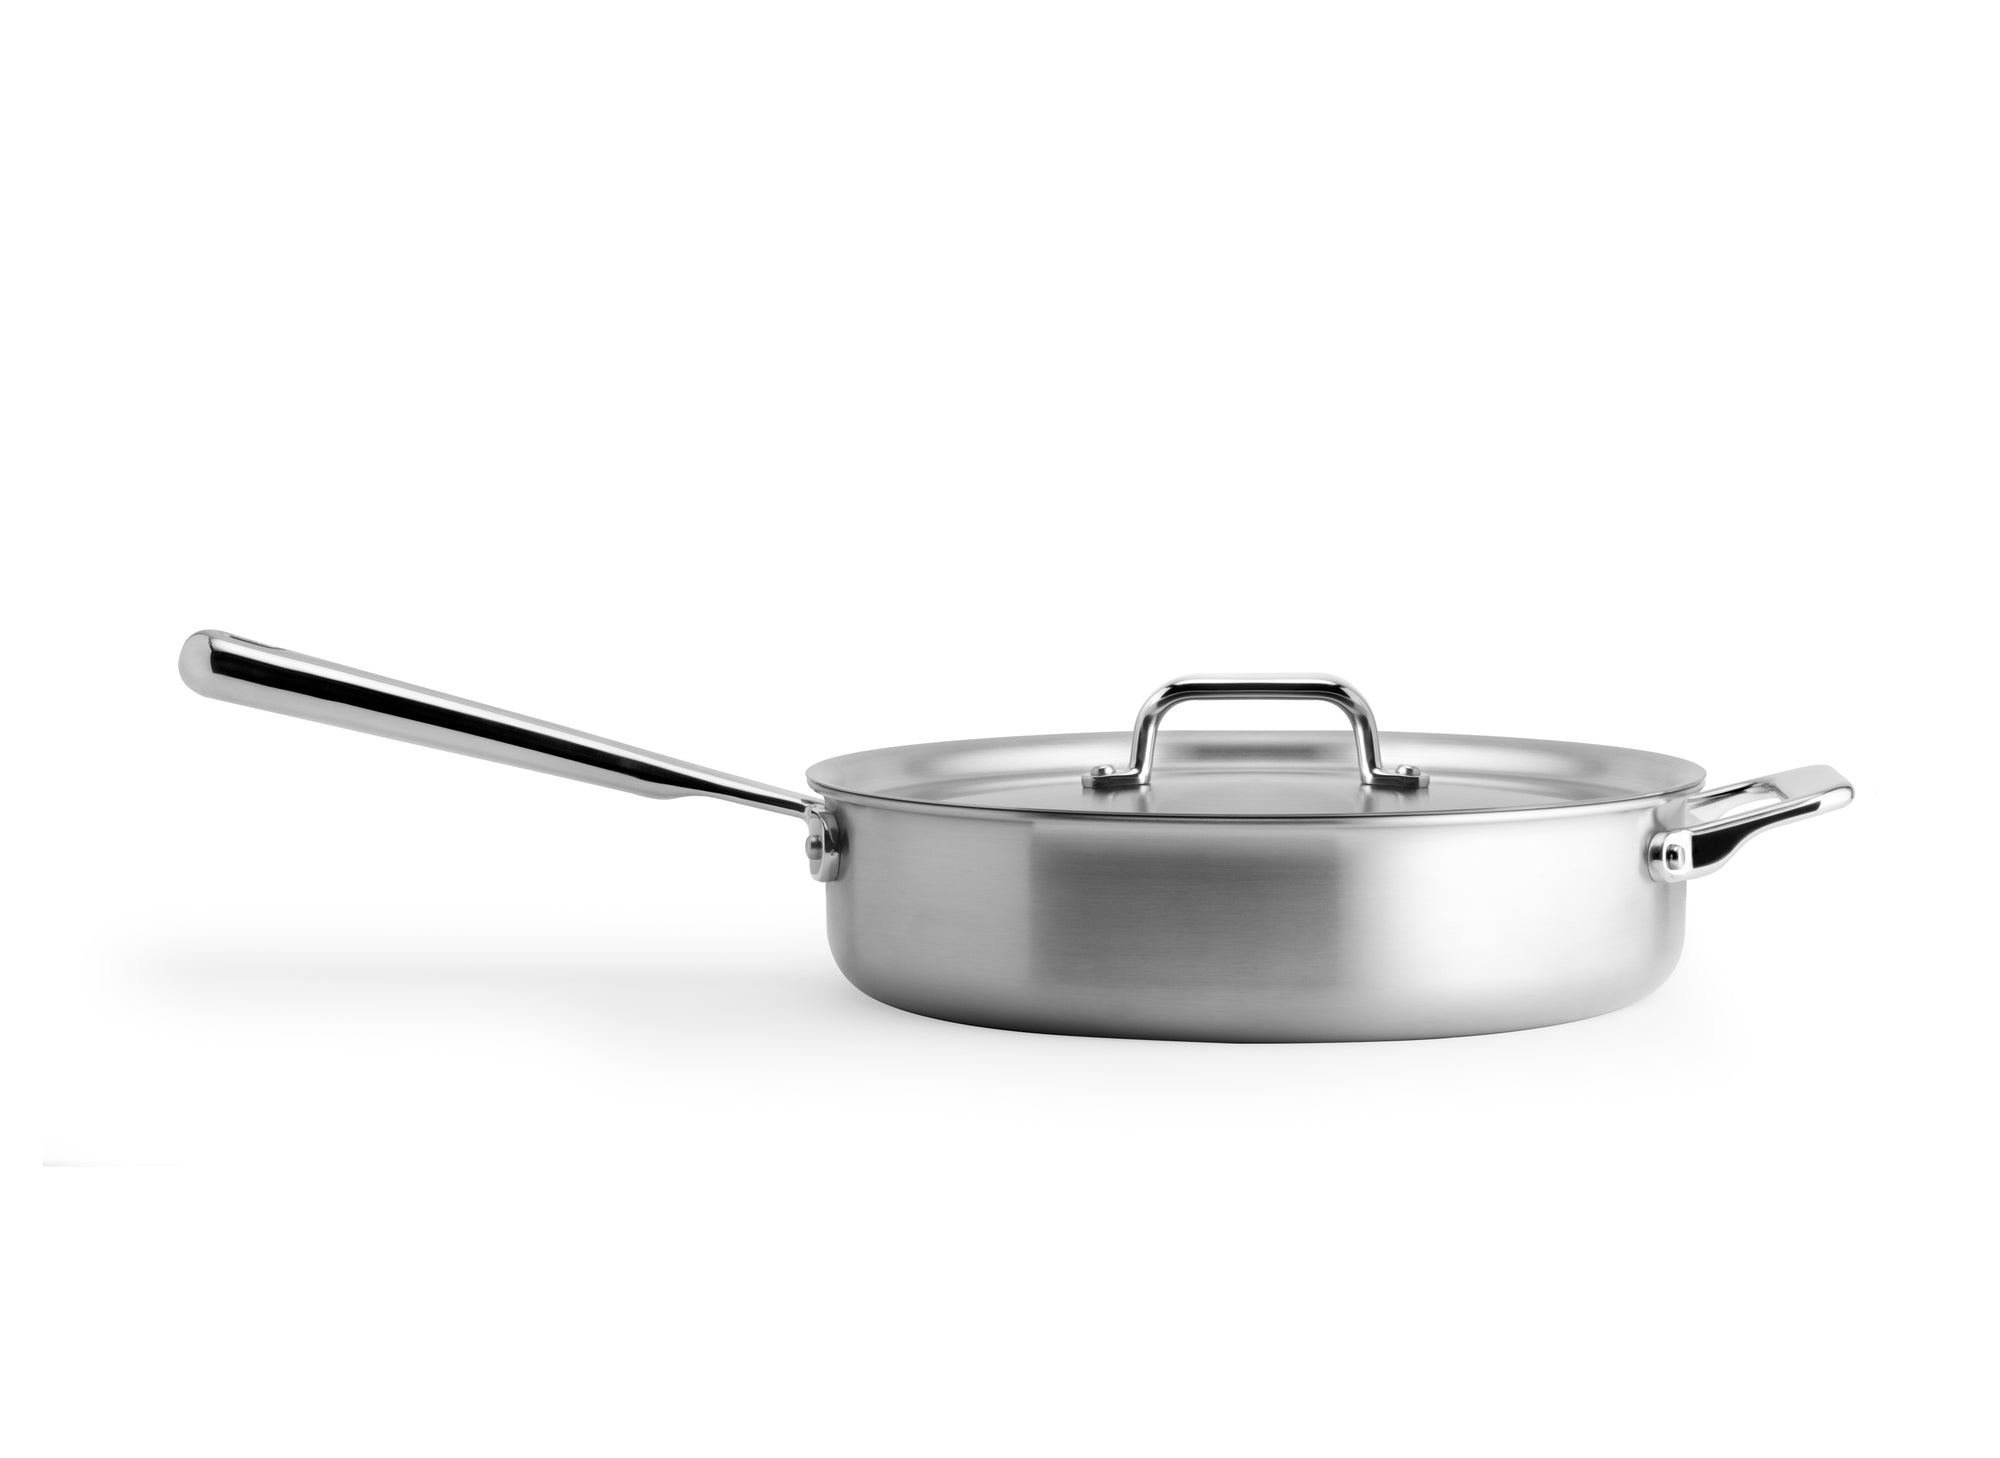 3.5 Quart Saute Pan, Best Stainless Steel Saute Pan